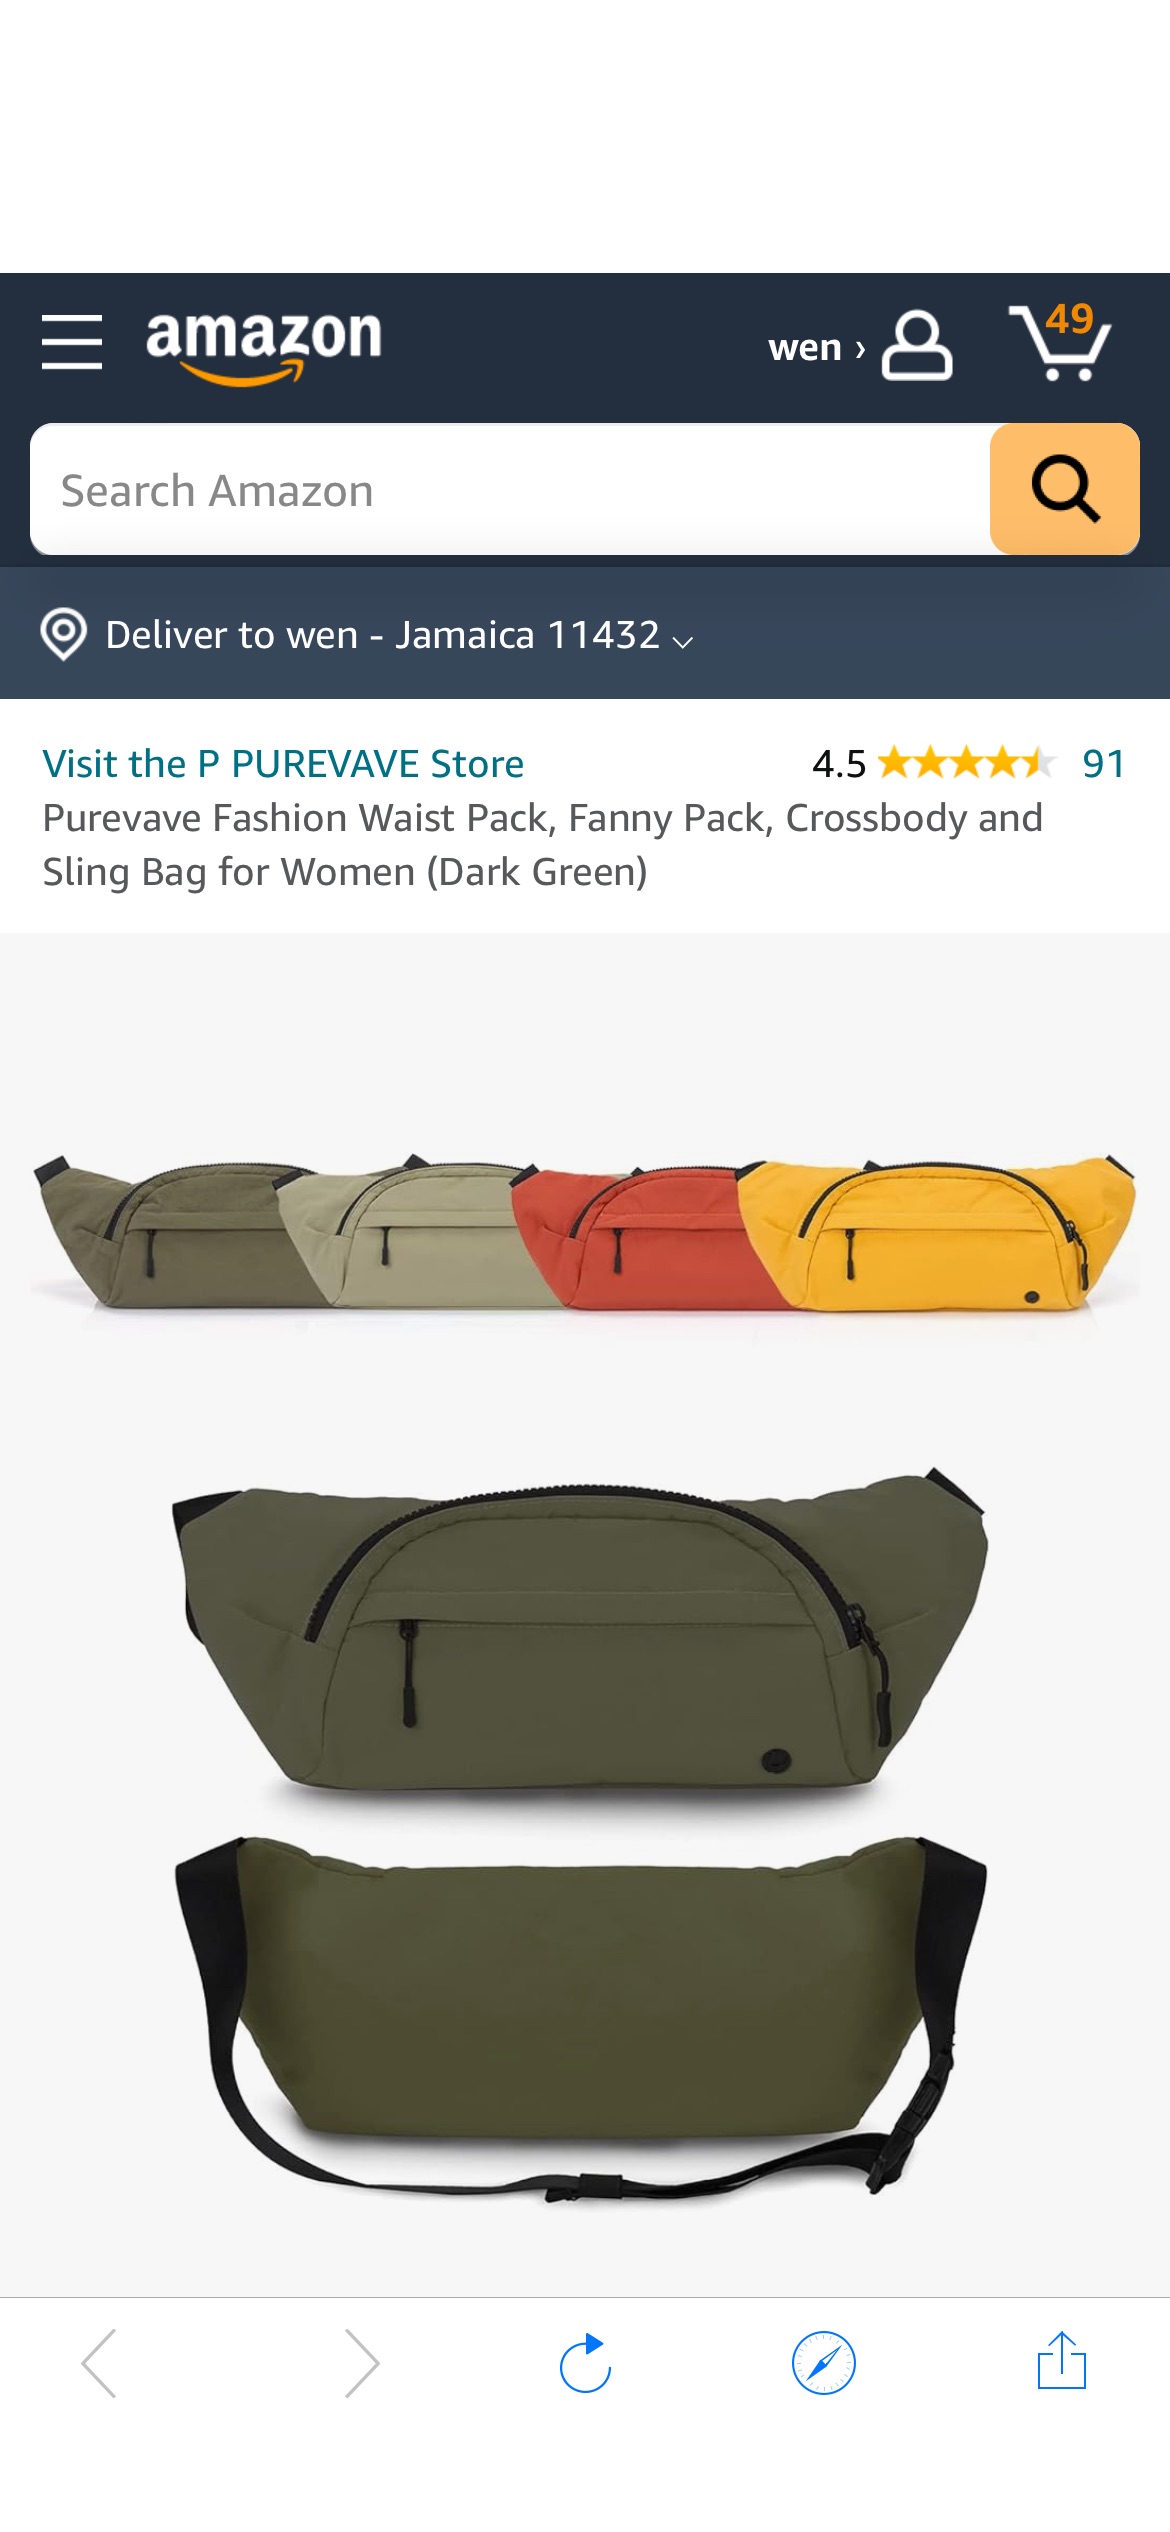 Amazon.com | Purevave Fashion Waist Pack, Fanny Pack, Crossbody and Sling Bag for Women (Dark Green) | Waist Packs